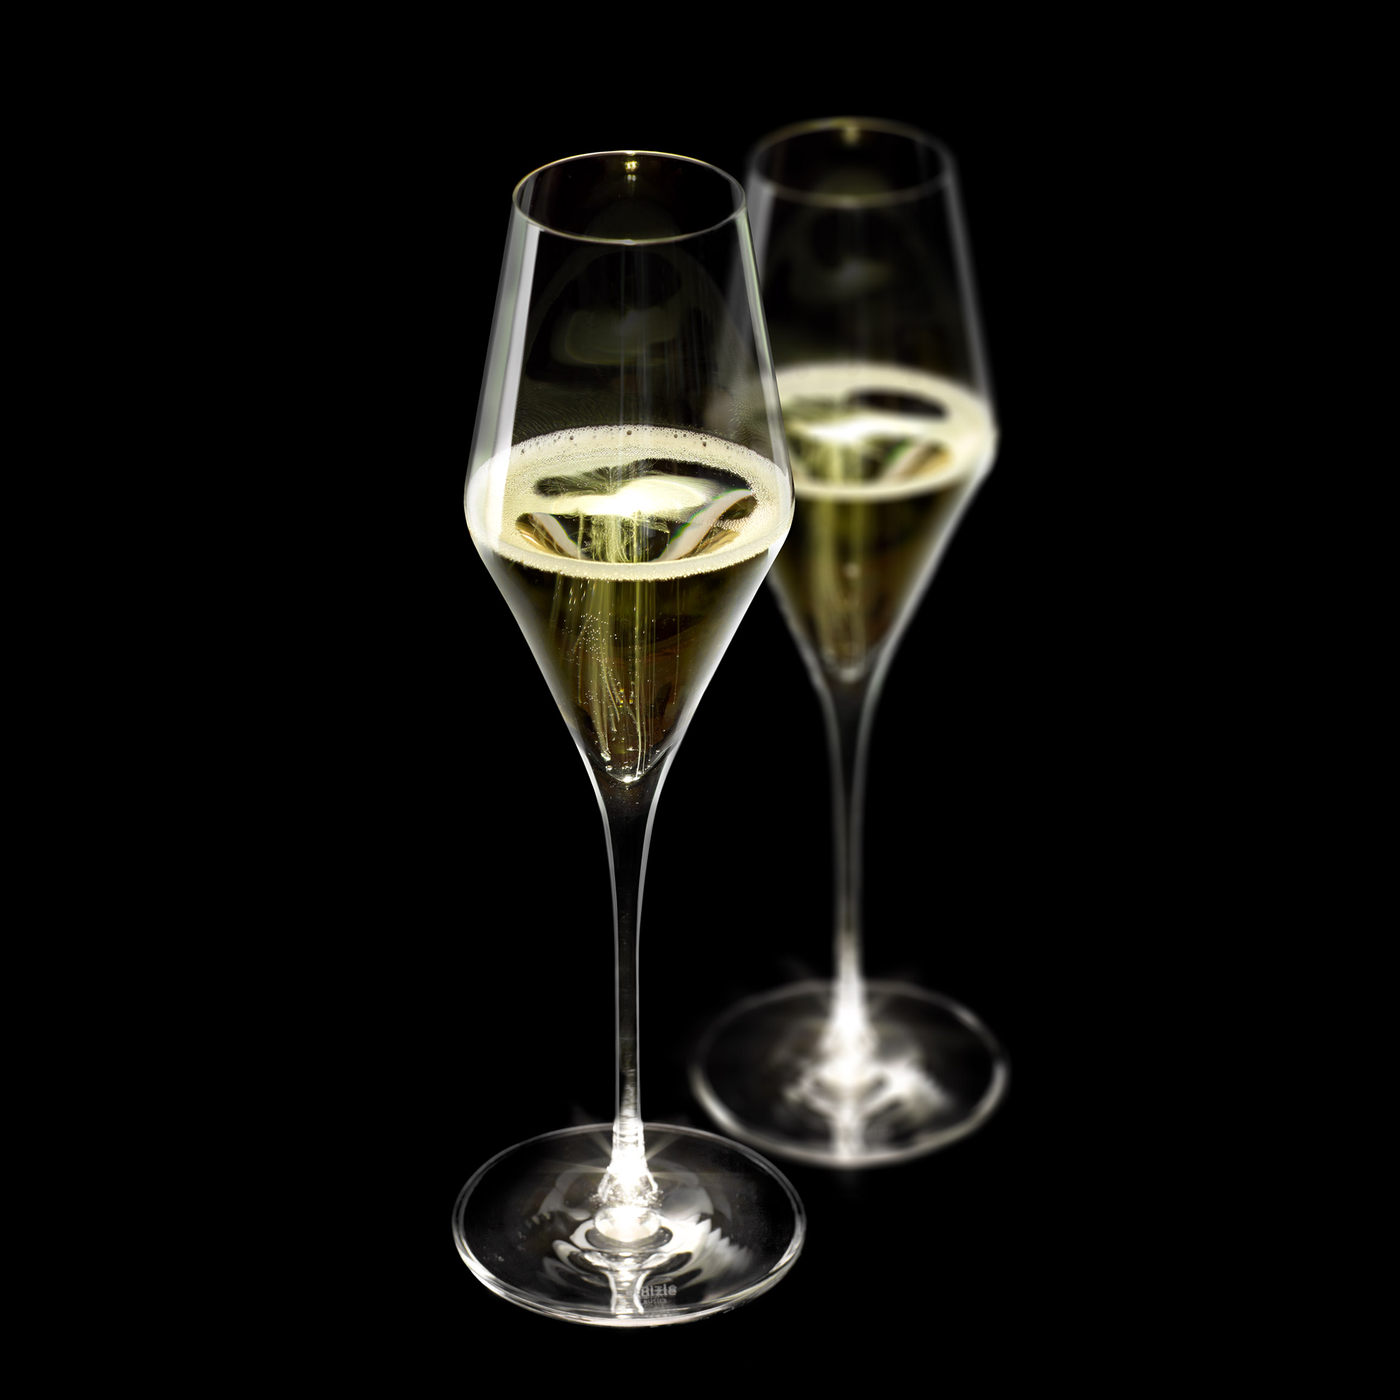 Quatrophil Champagne HIGHLIGHT White Flute 10 oz. - Set of 2